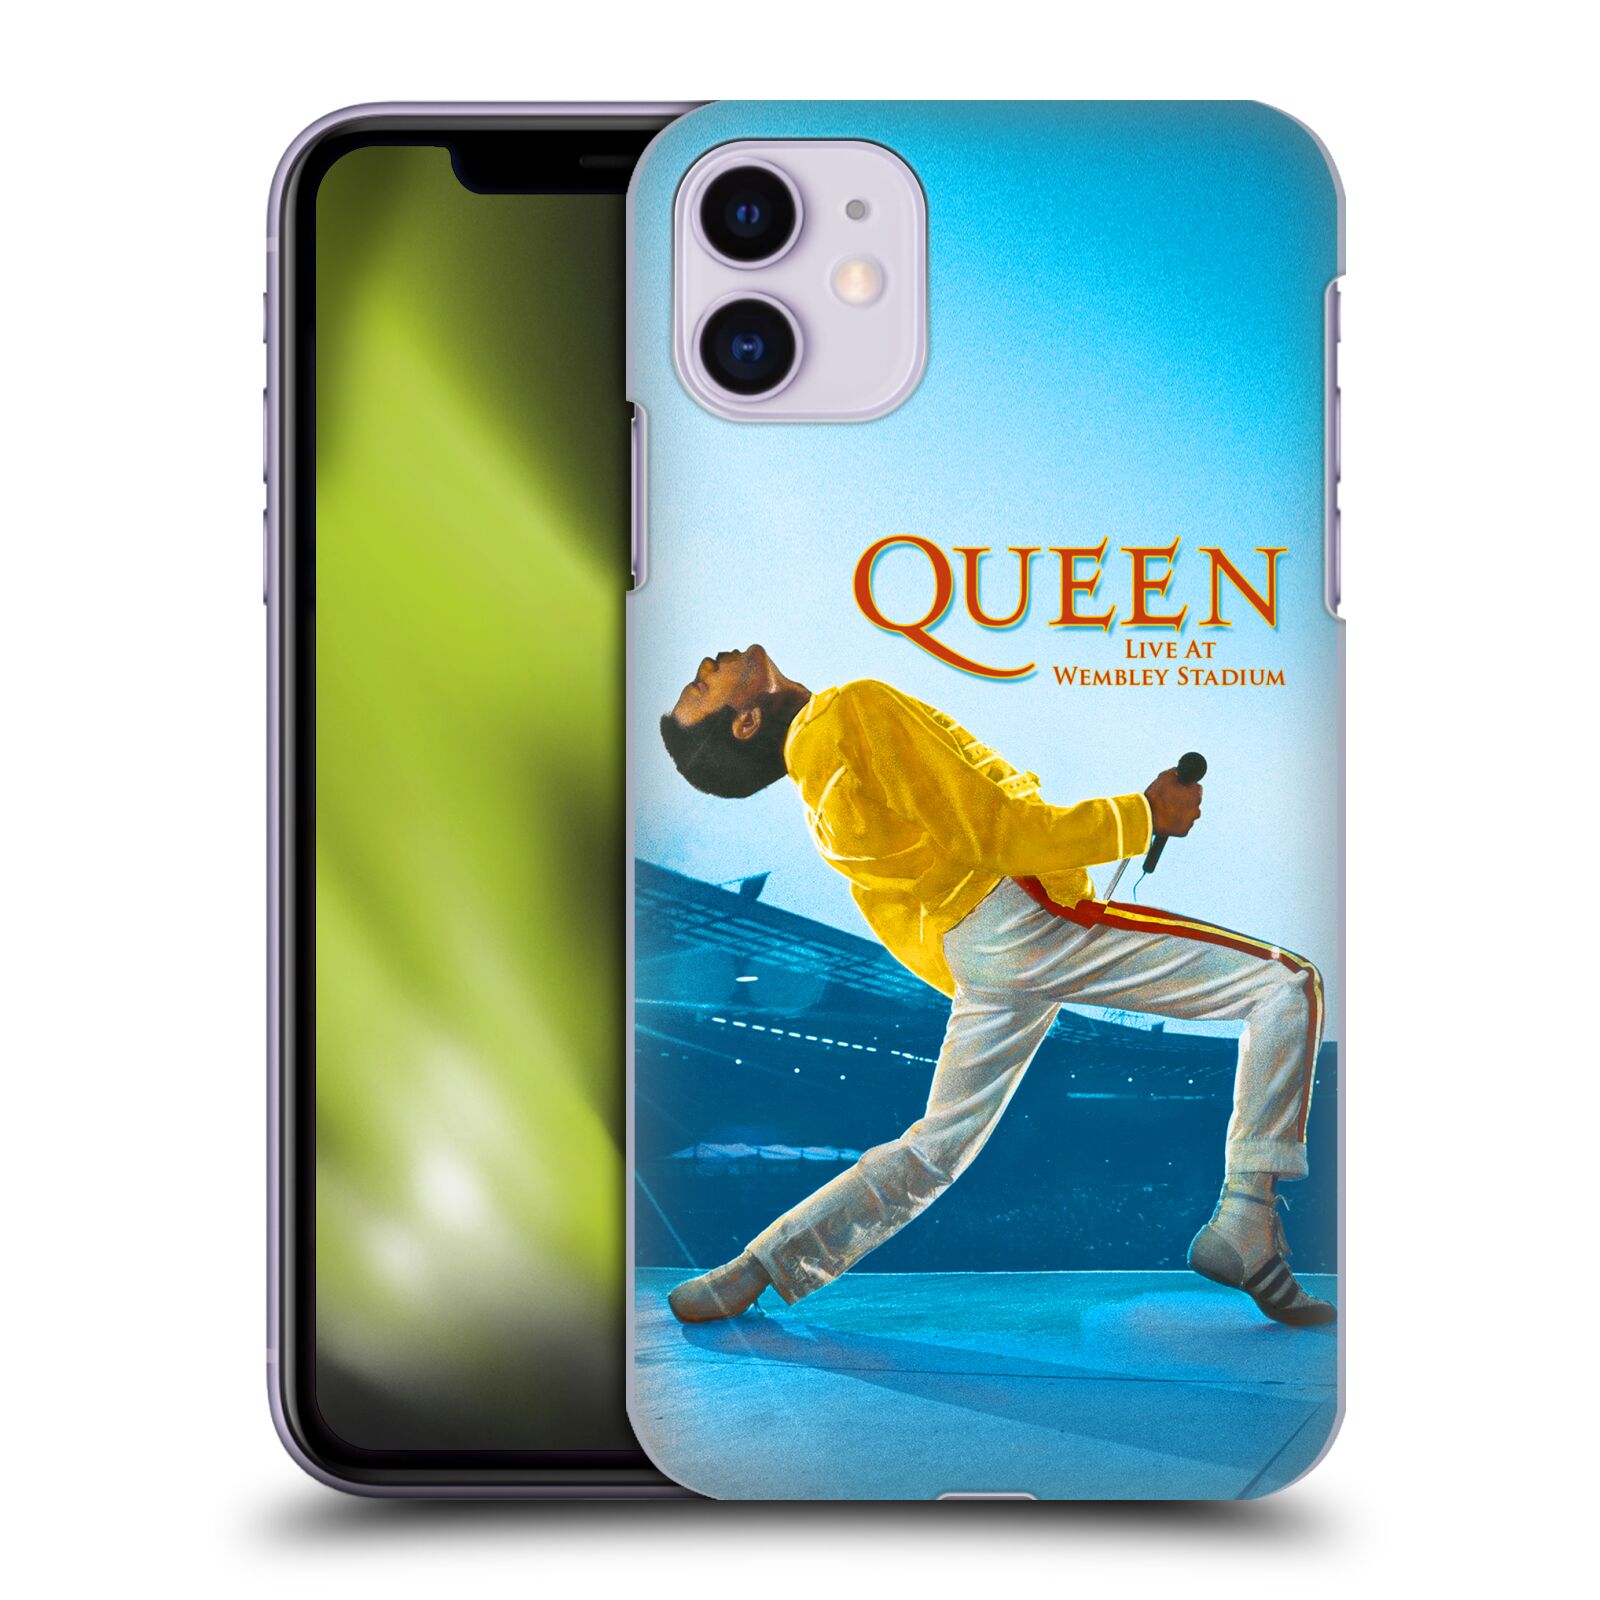 Plastové pouzdro na mobil Apple iPhone 11 - Head Case - Queen - Freddie Mercury - výprodej (Plastový kryt, pouzdro, obal na mobilní telefon Apple iPhone 11 s displejem 6,1" s motivem Queen - Freddie Mercury)